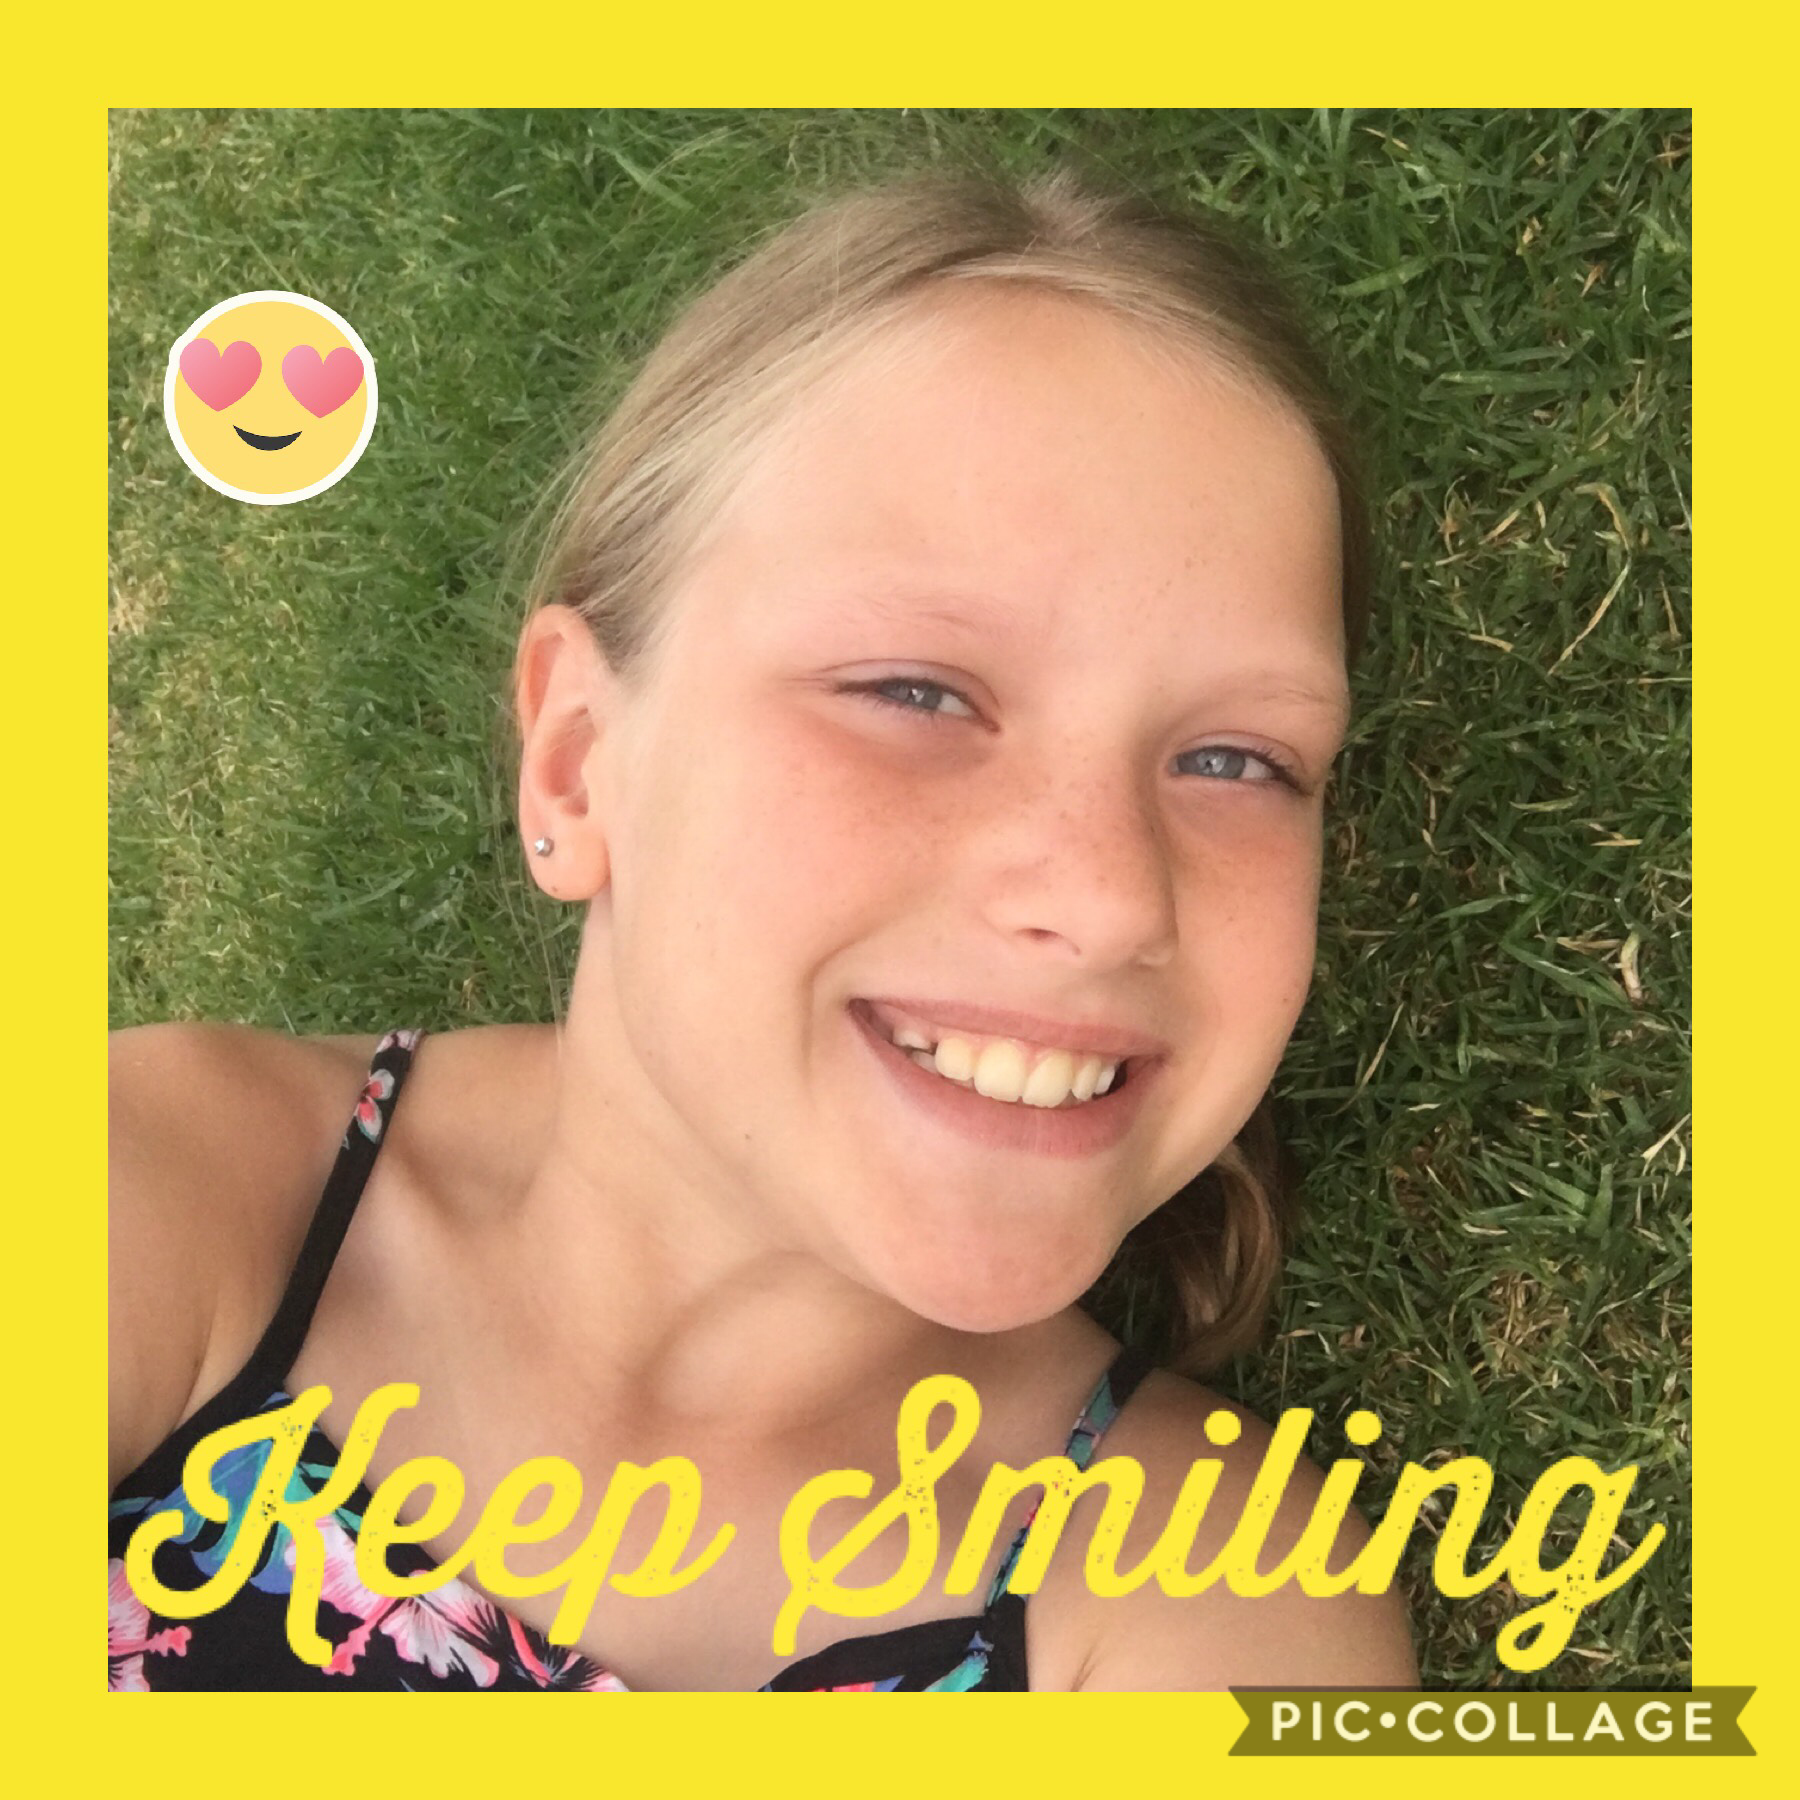 Keep smiling like it said